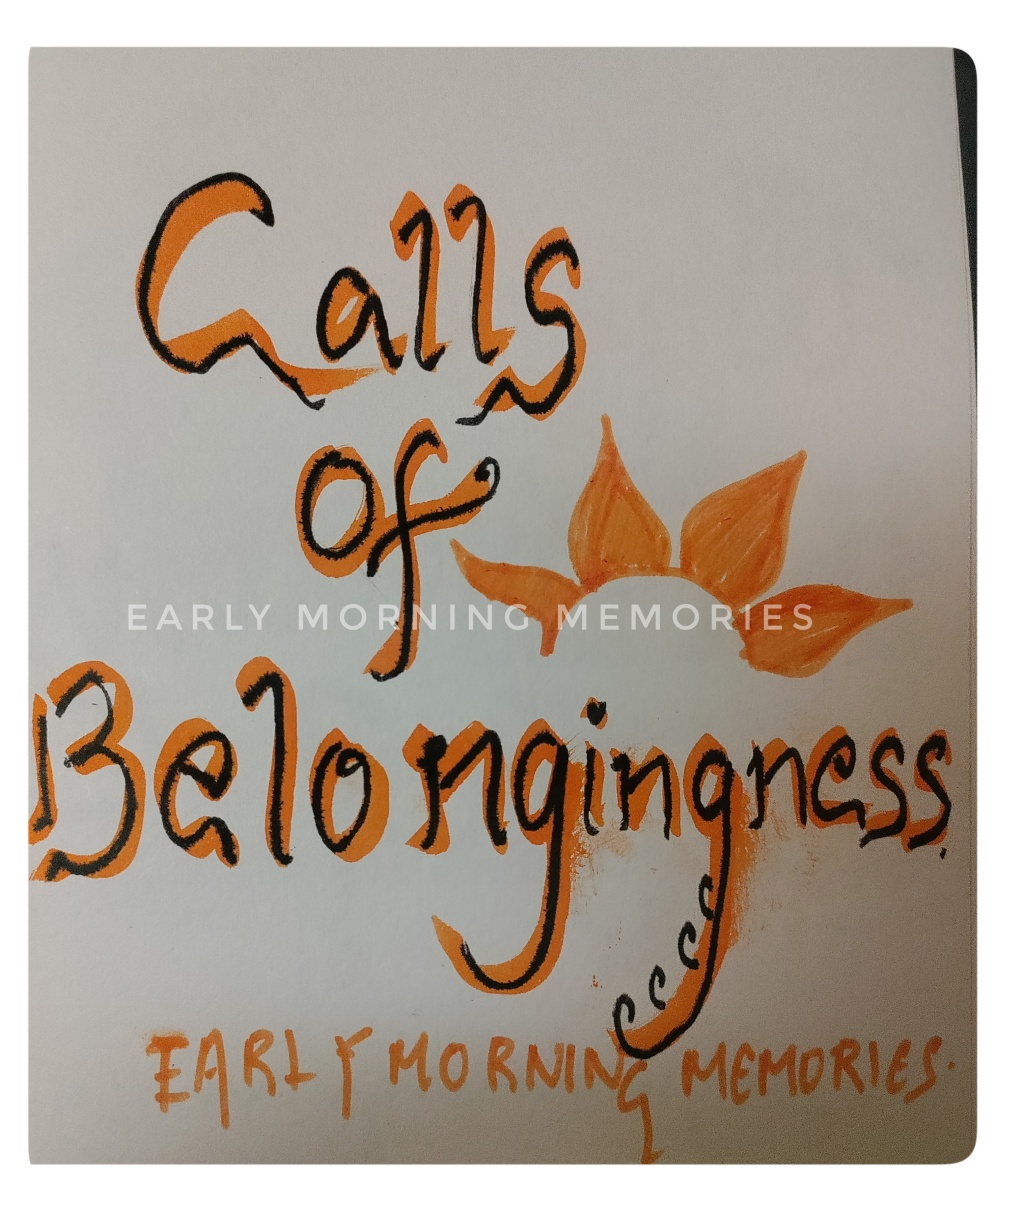 Calls of Belongingness